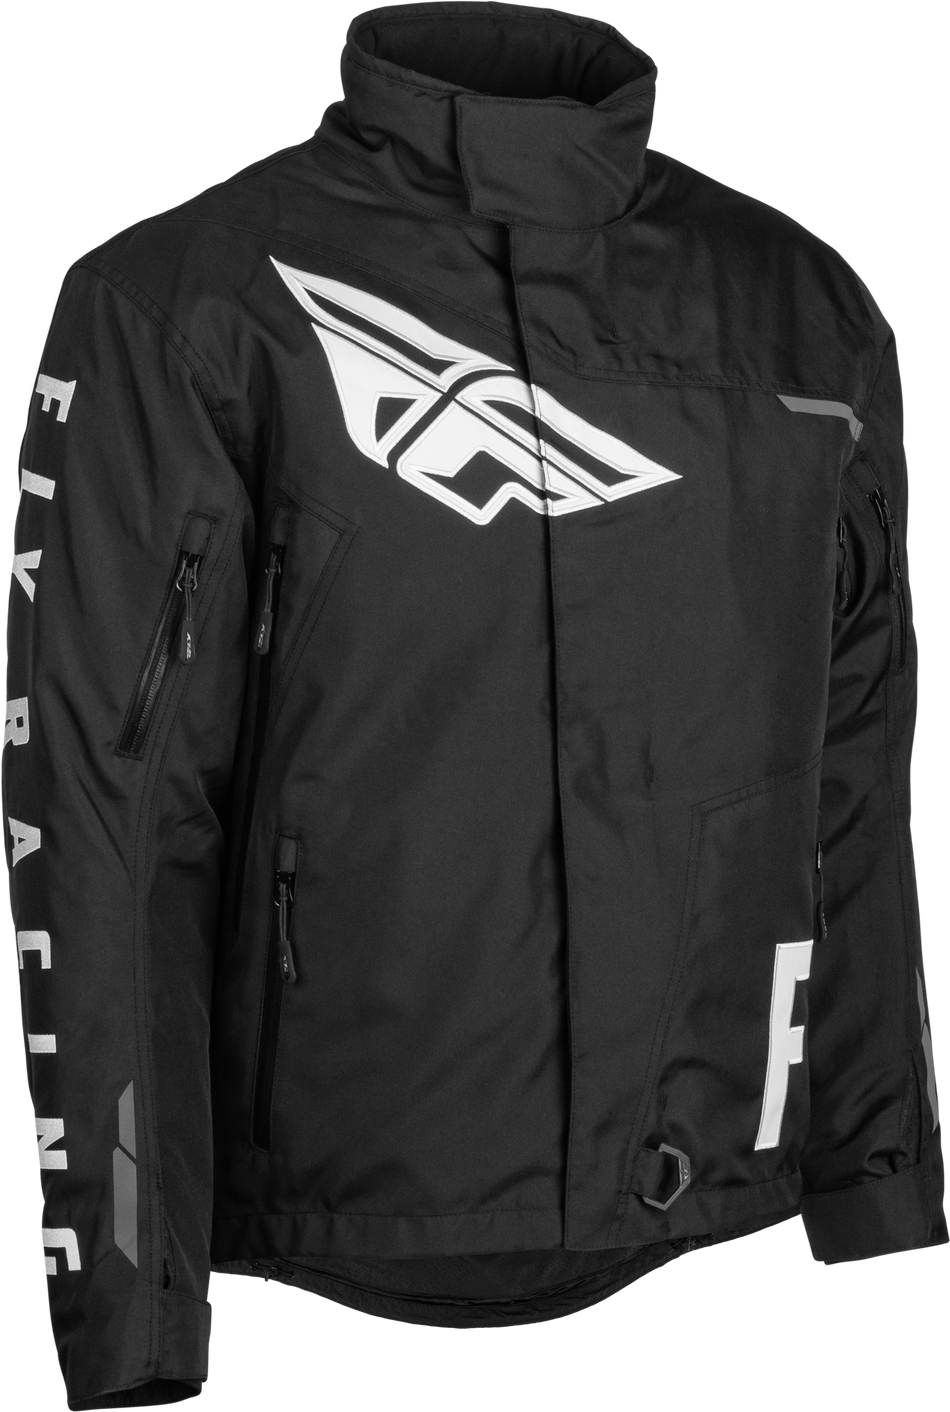 FLY RACING Snx Pro Jacket Black 3x 470-41153X